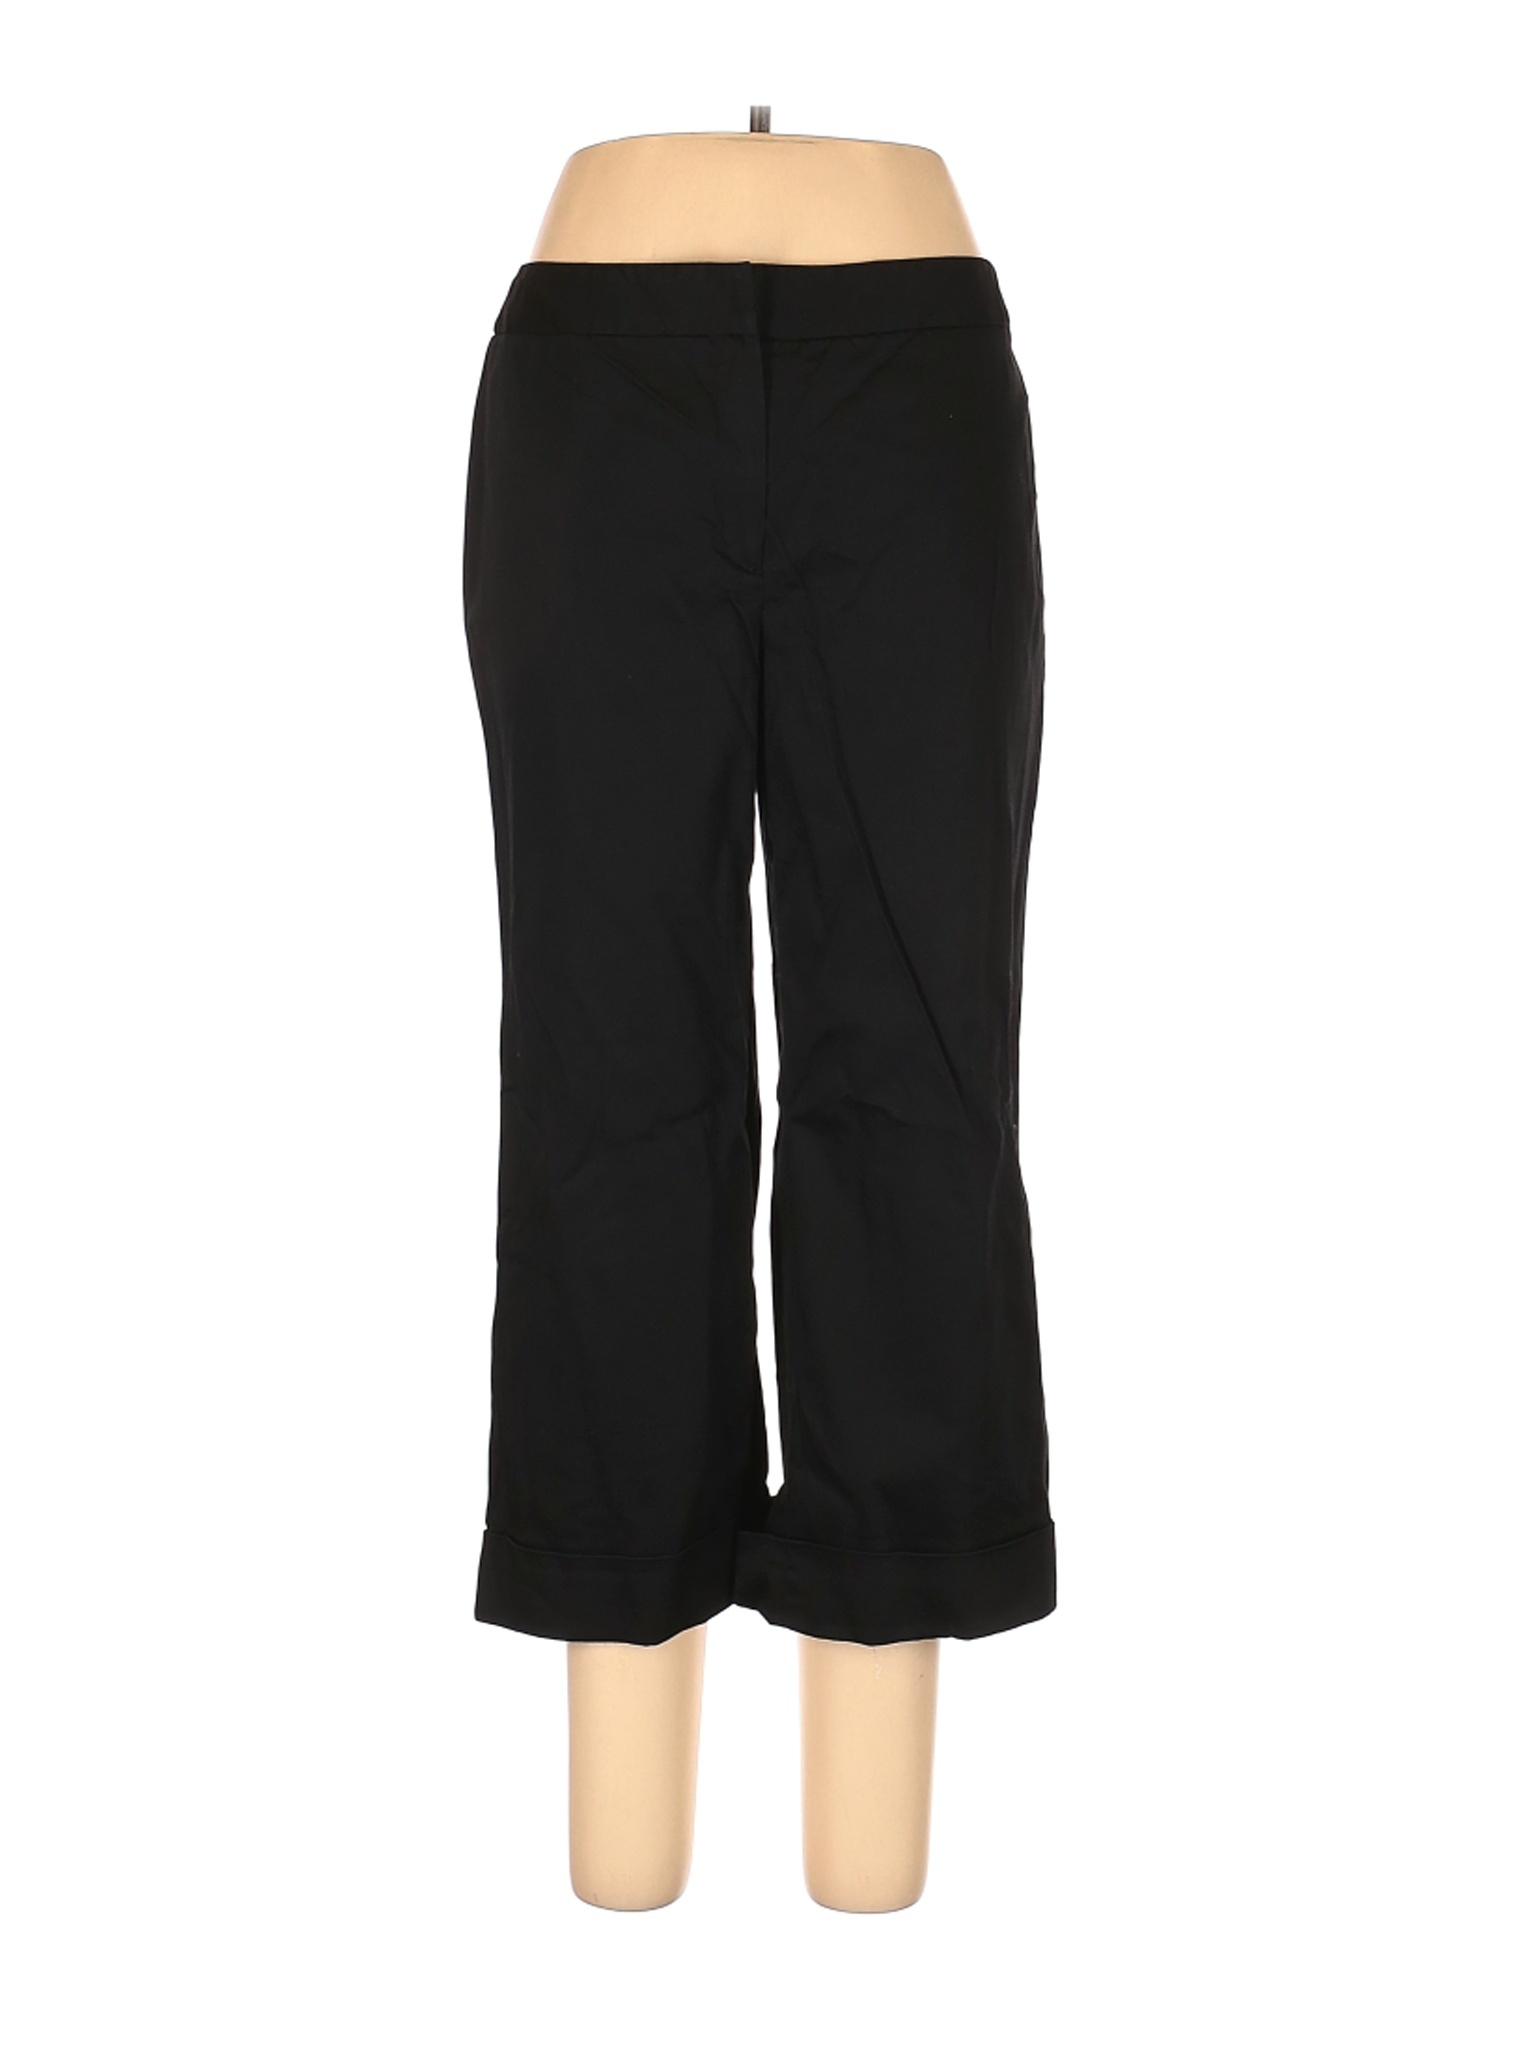 Willi Smith Women Black Dress Pants 12 | eBay